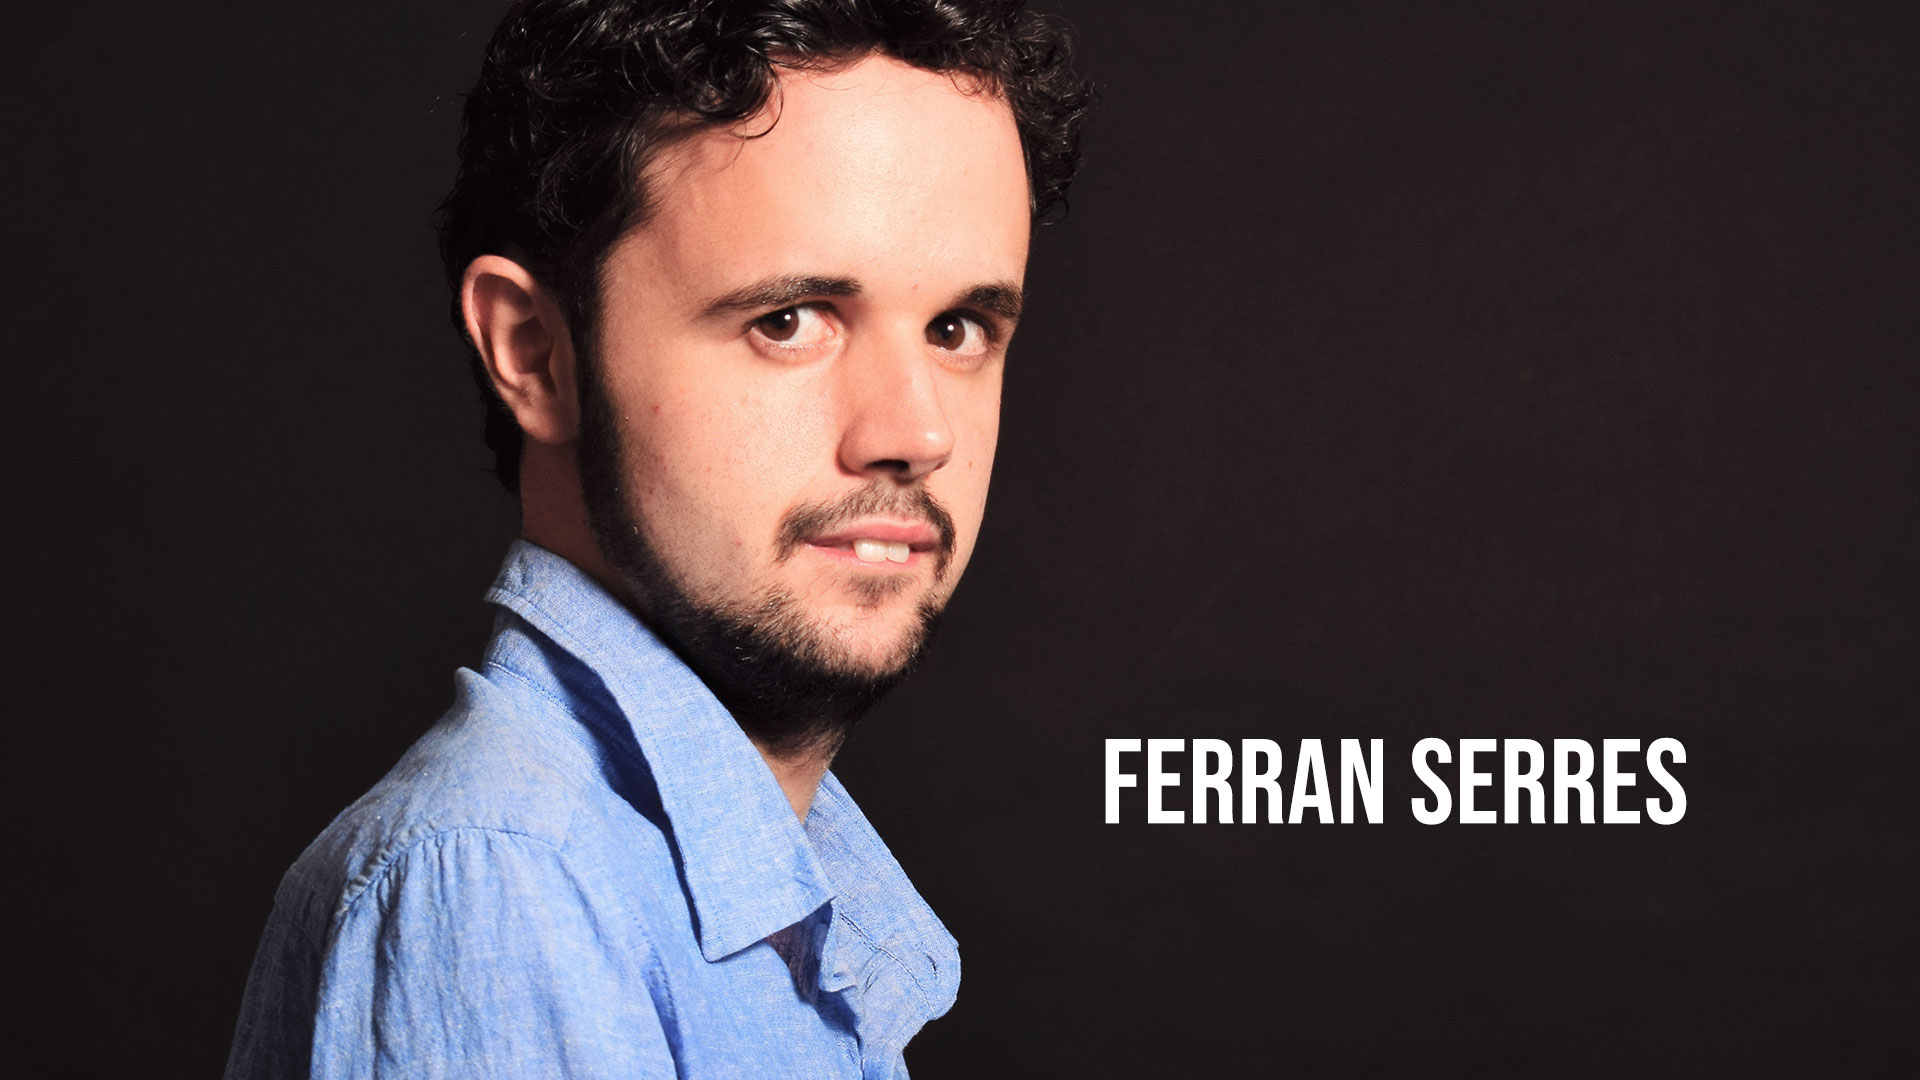 Ferran Serres - Videobook Actor